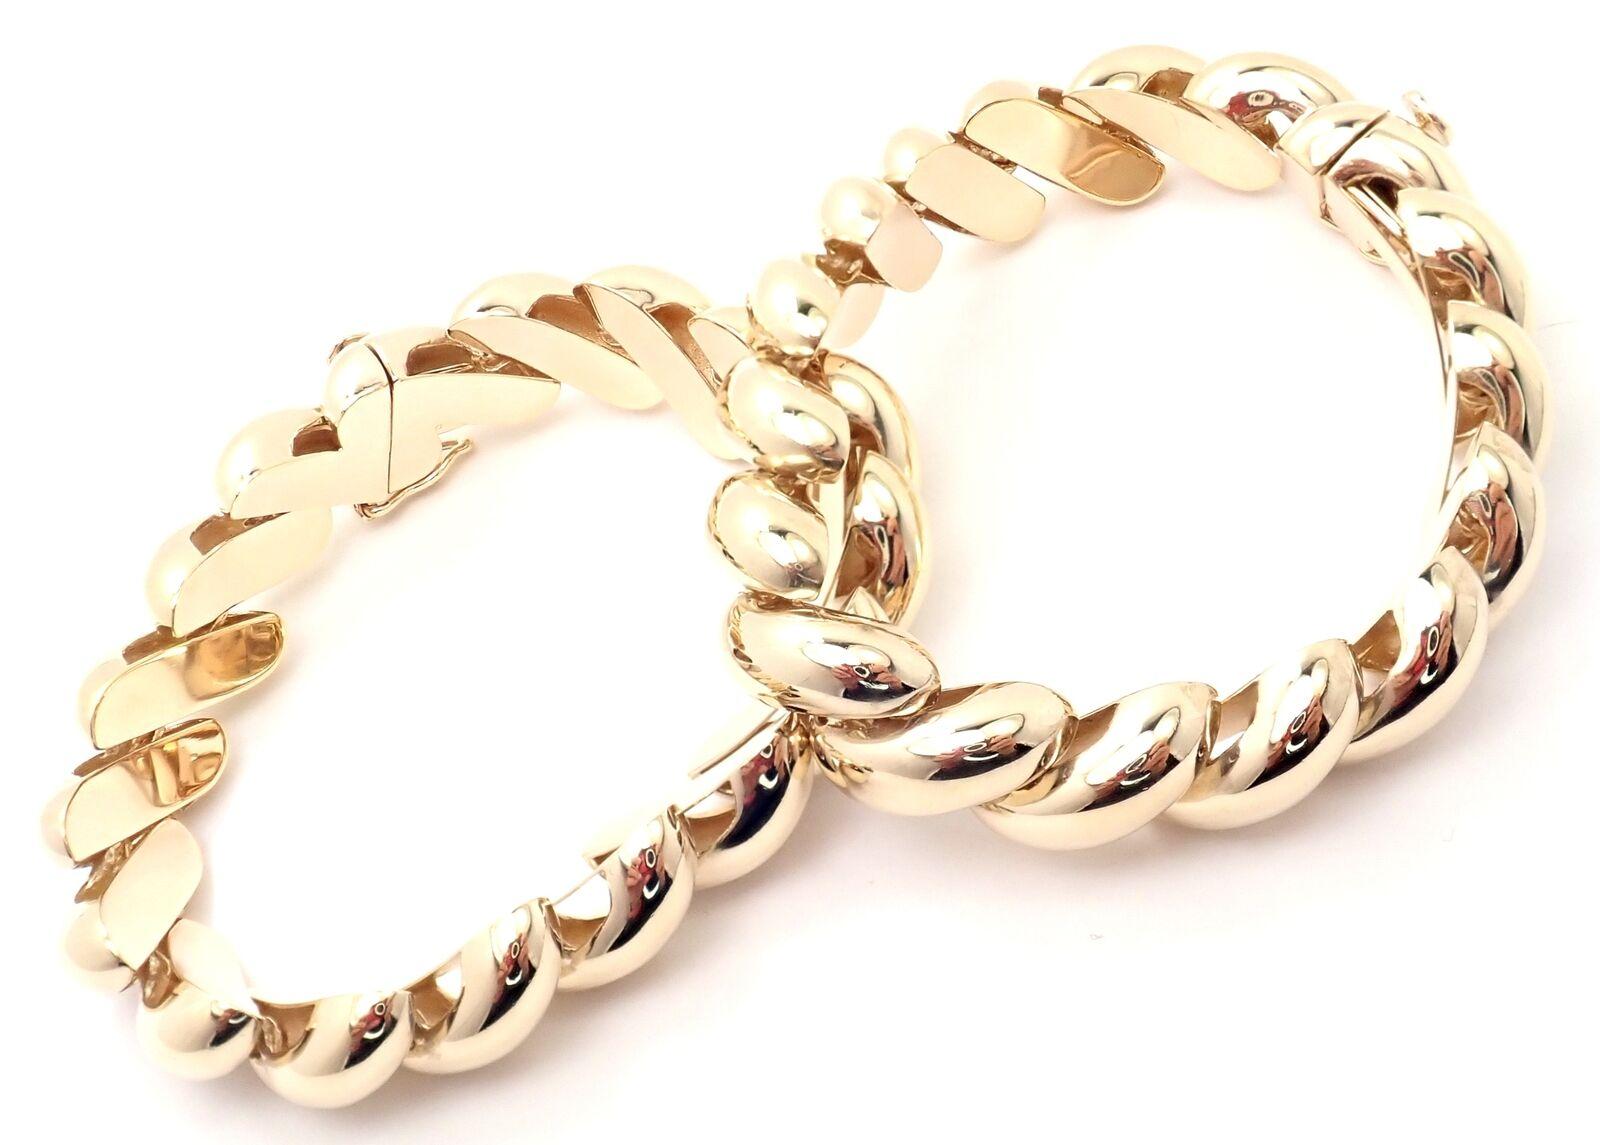 14k Yellow Gold Vintage Set Of Two Macaroni San Marco Link Bracelets by Tiffany & Co. 
Details: 
Length: Each bracelet is 7.25